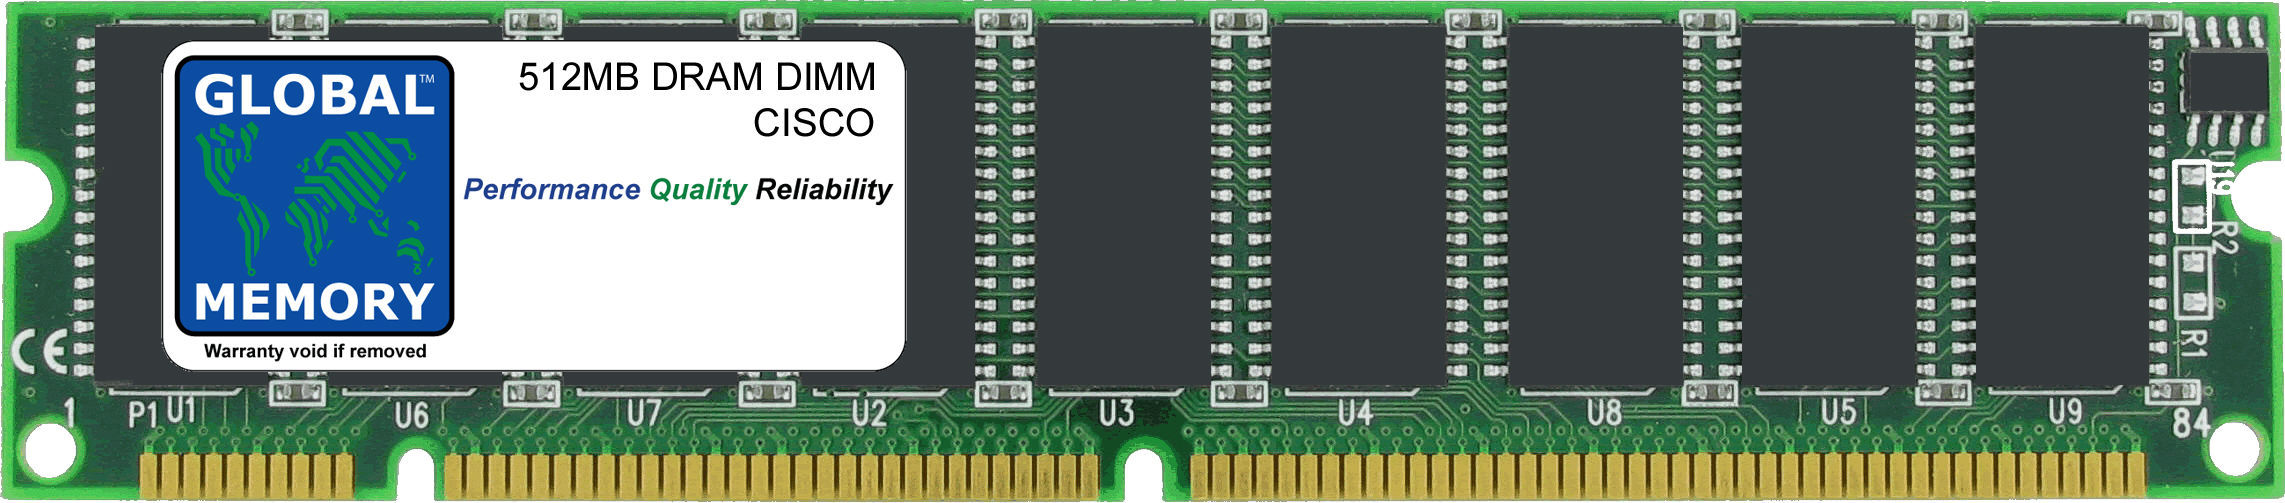 512MB DRAM DIMM MEMORY RAM FOR CISCO 12000 SERIES ROUTERS GRP-B LINE CARD (MEM-GRP-512) - Click Image to Close